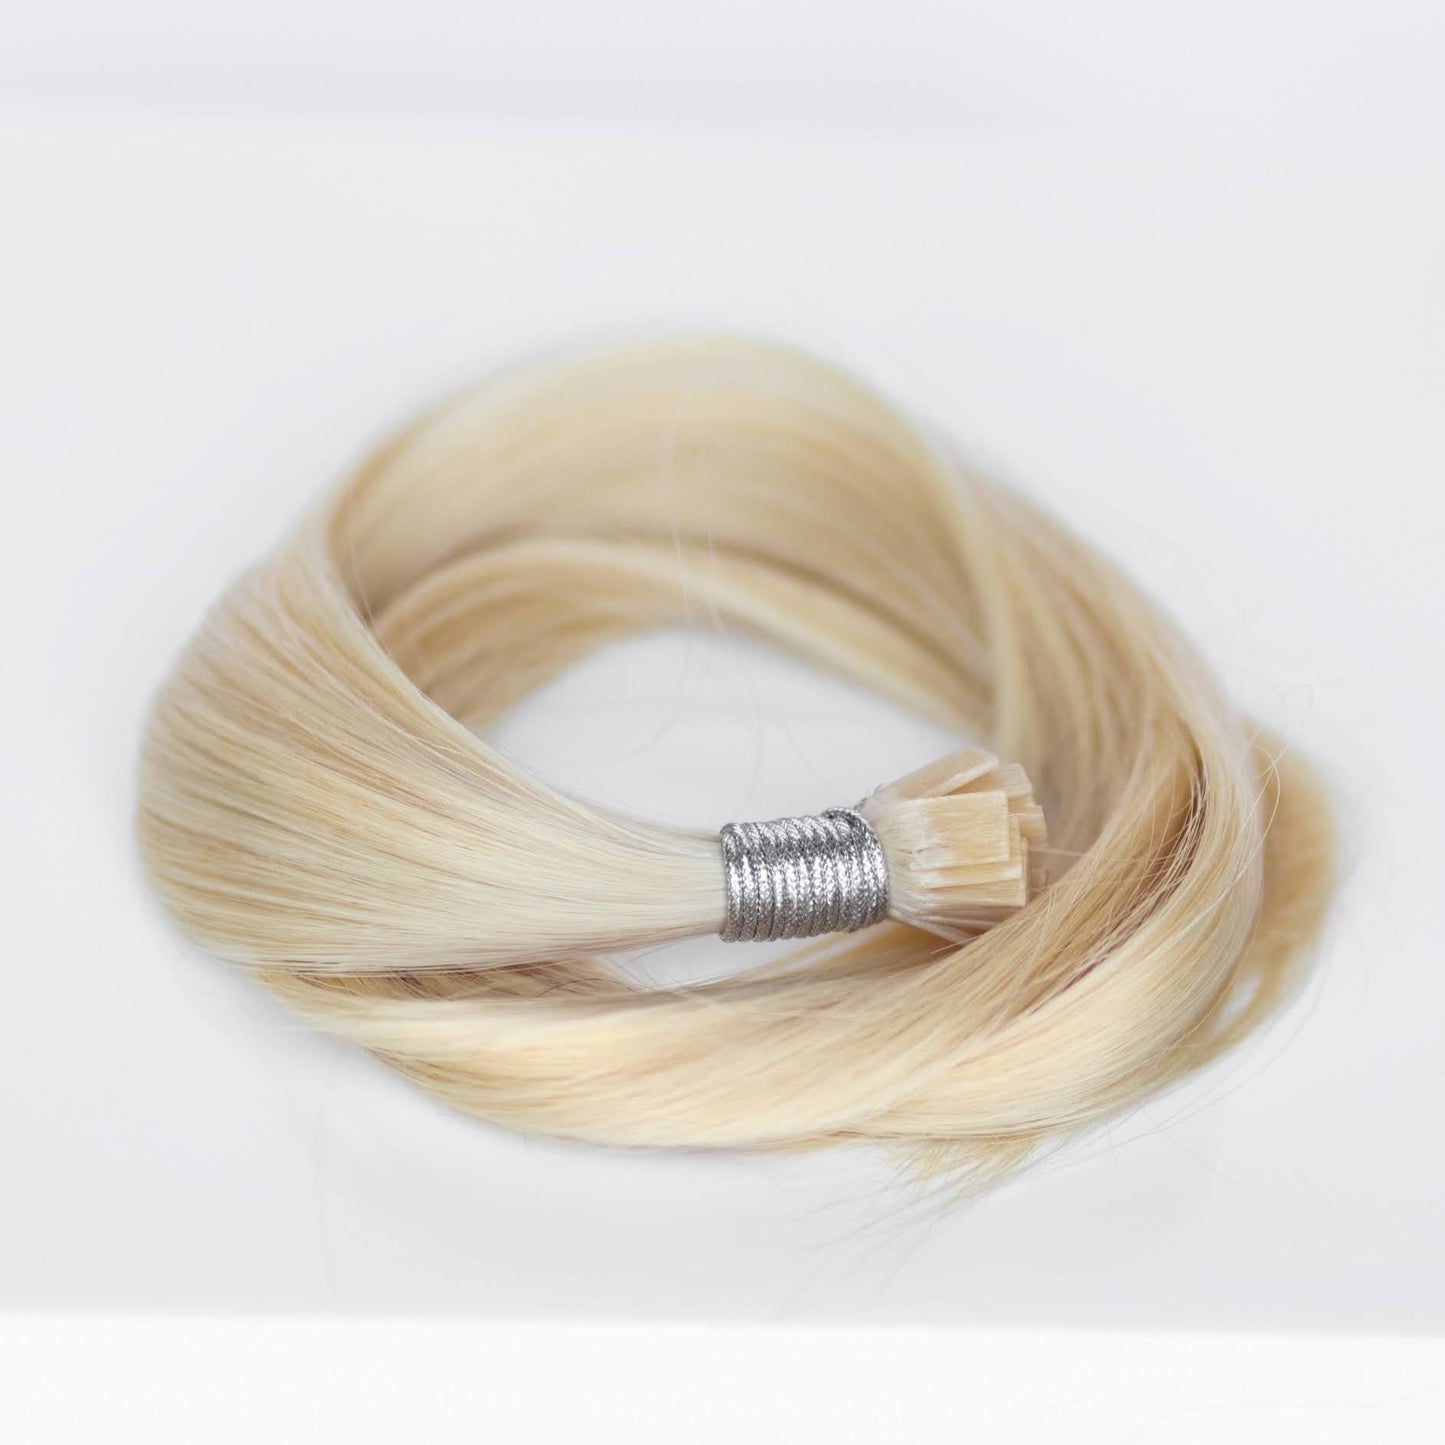 K-Tip 18" 25g Professional Hair Extensions - Ash Blonde #60